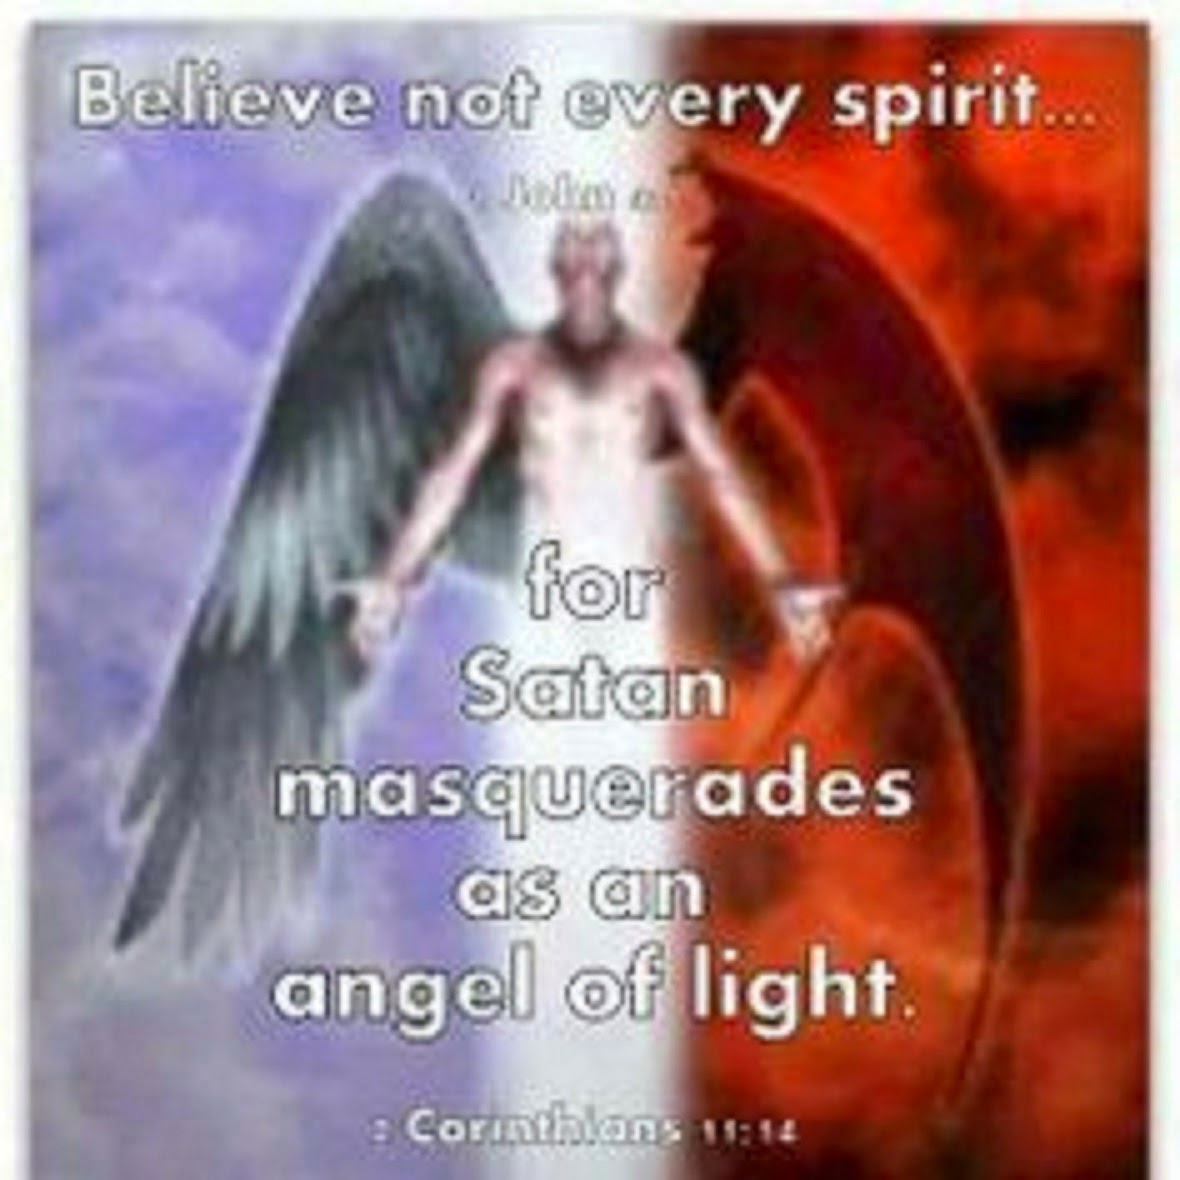 SATAN CAN APPEAR AS AN ANGEL OF LIGHT